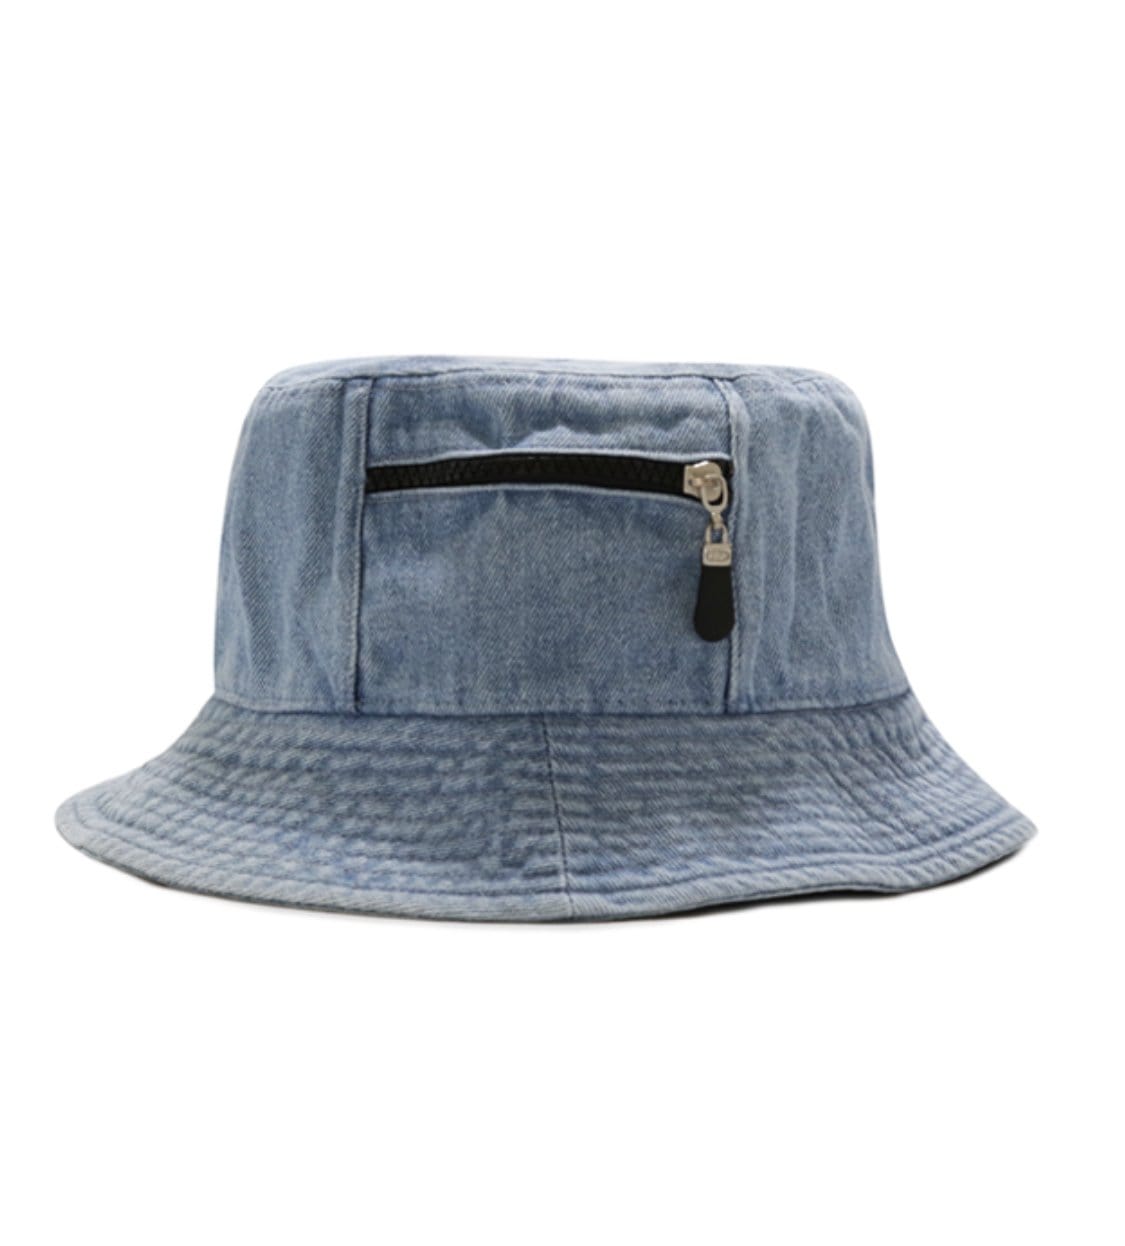 Grooveman Music Hats L/XL / Denim Light Blue Solid Bucket Fitted Hat